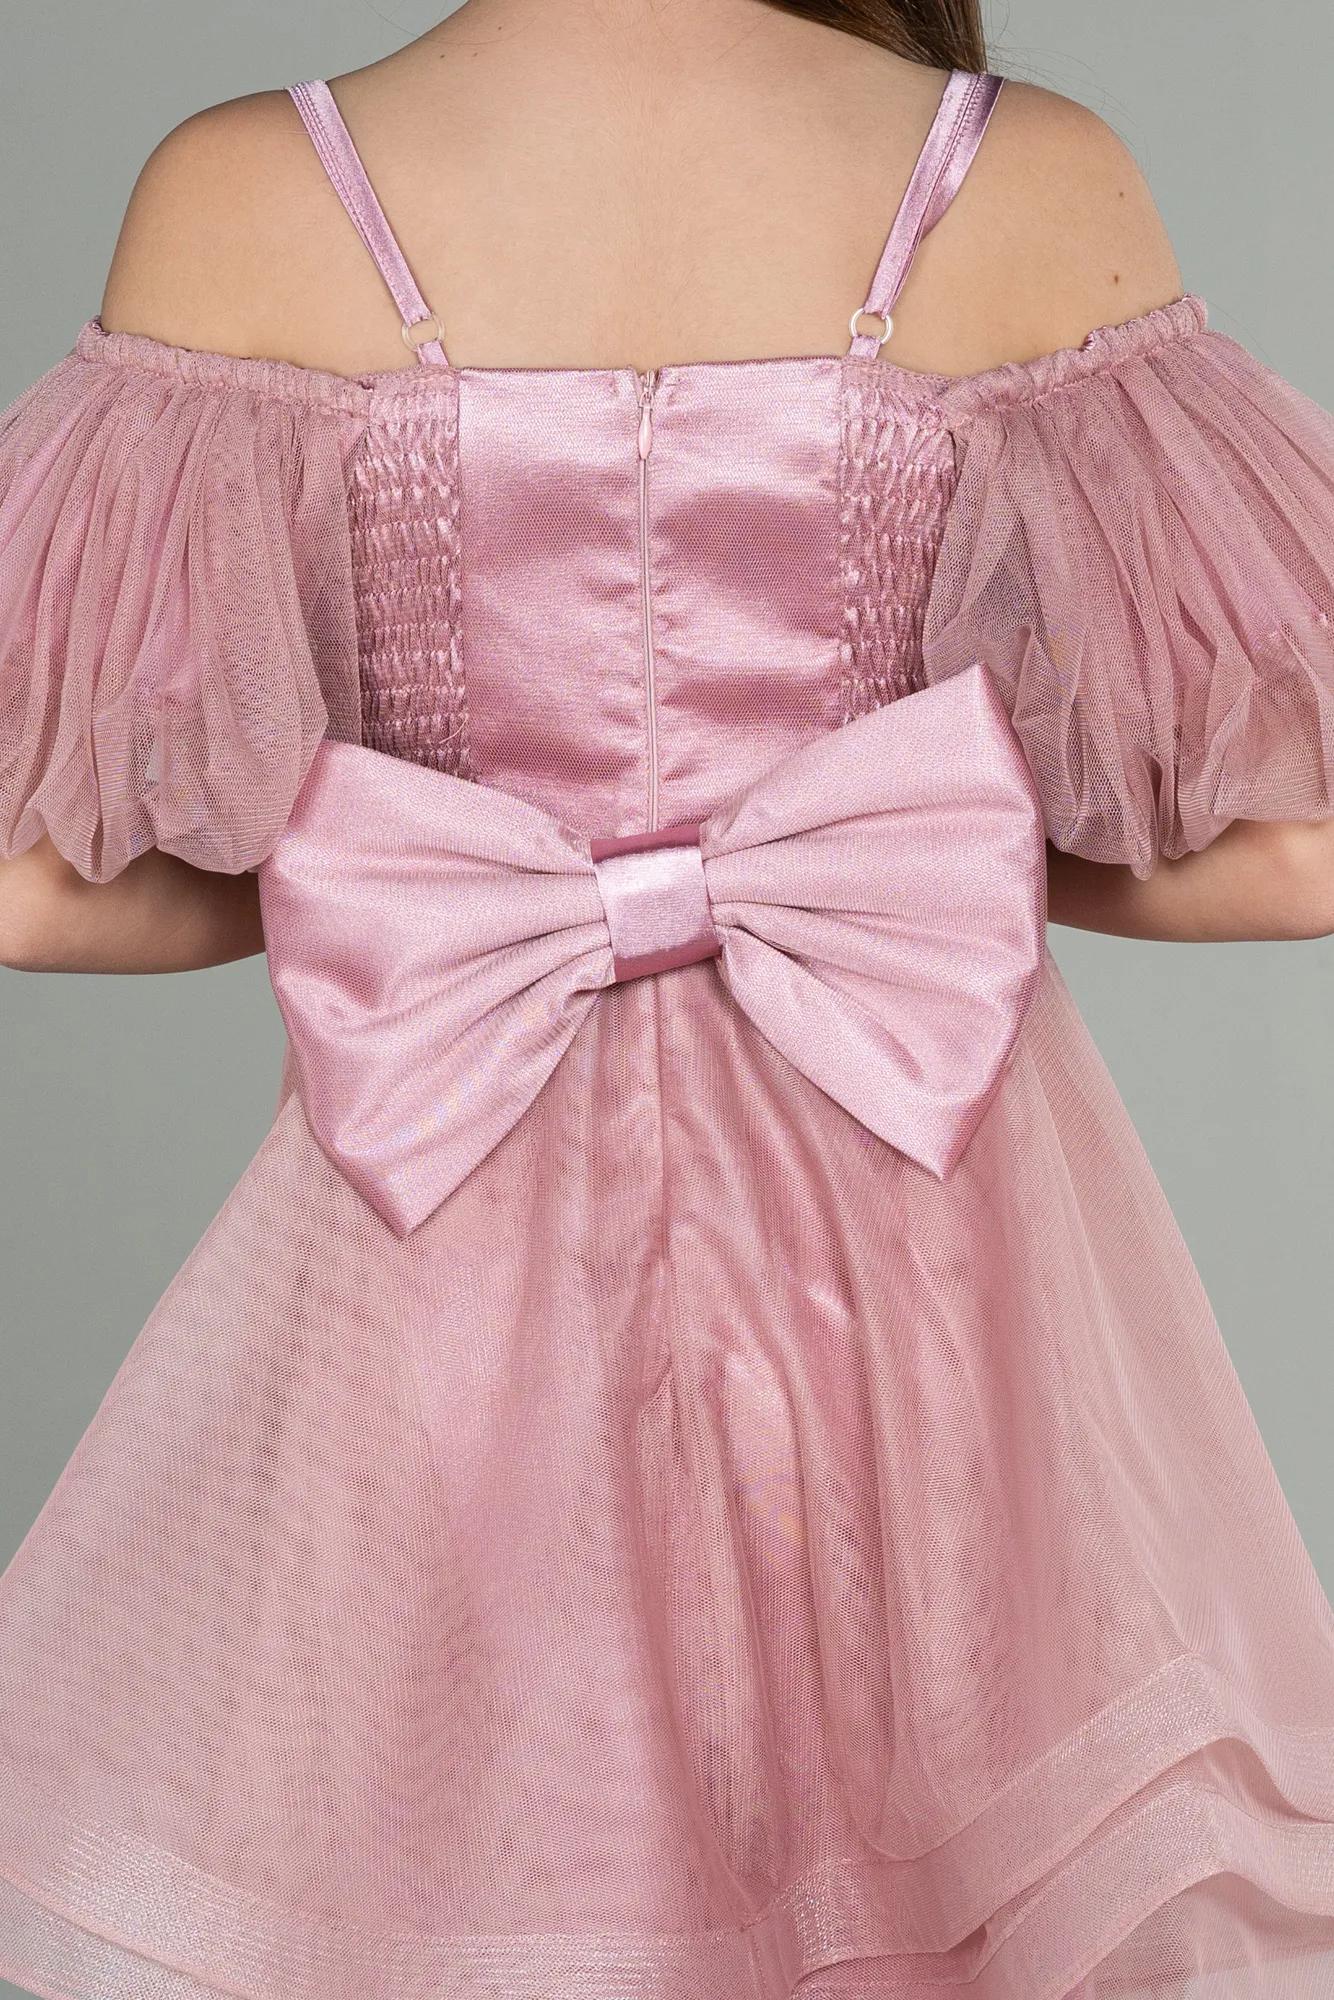 Powder Color-Short Girl Dress ABK1715